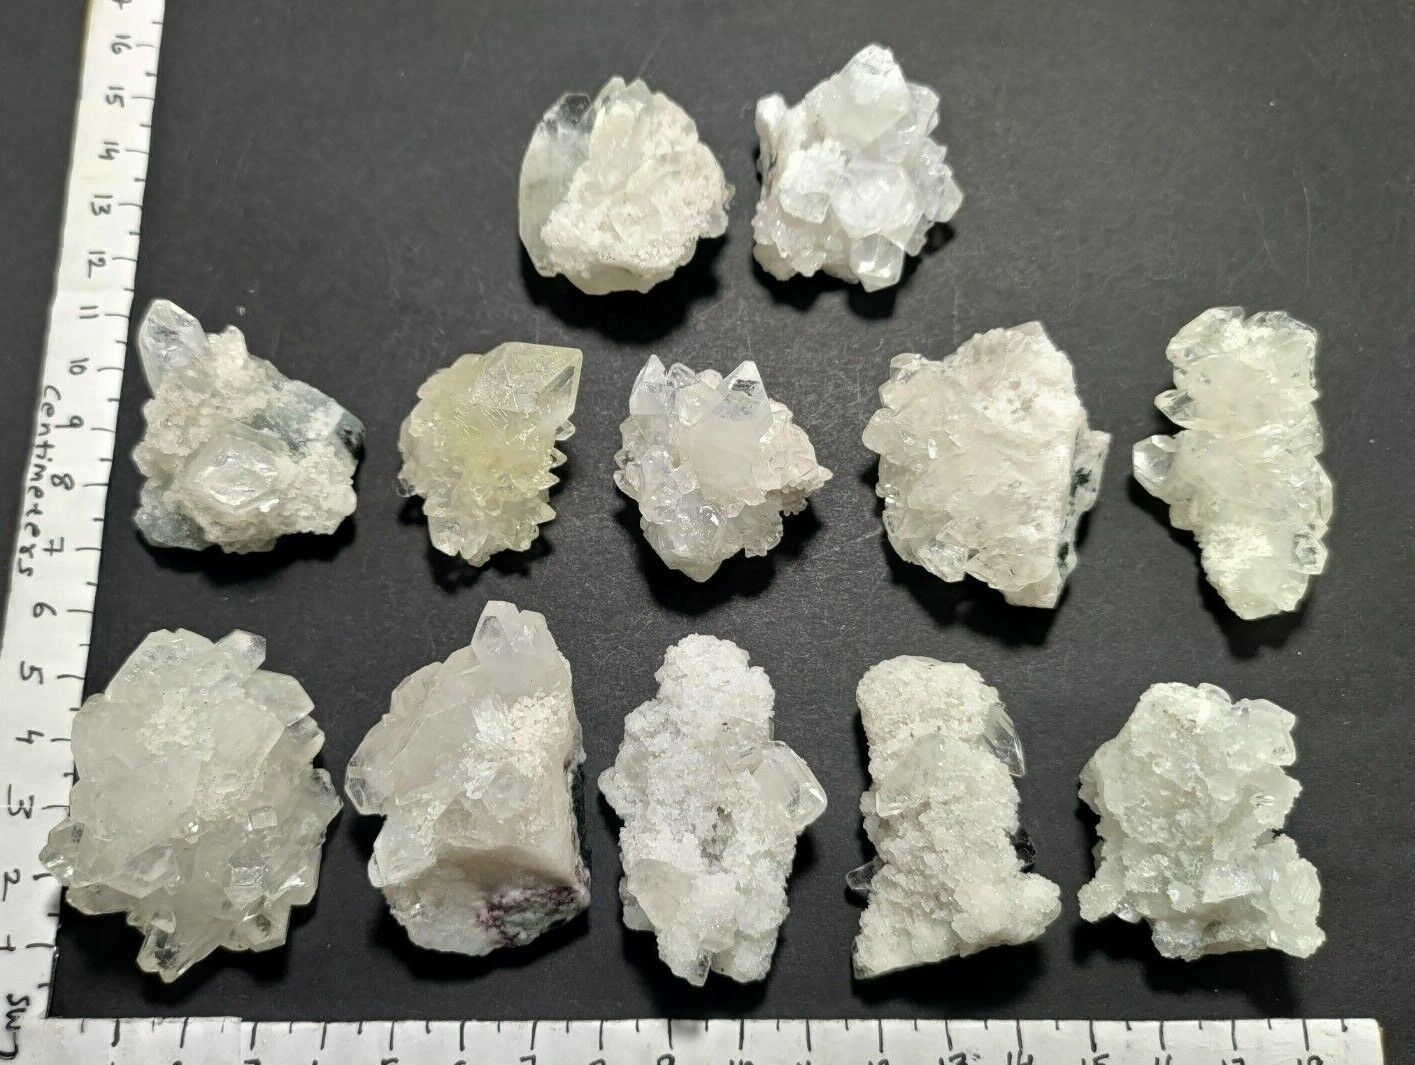 elegant lot of raw apophyllite chalcedony crystal display mineral specimen 1272